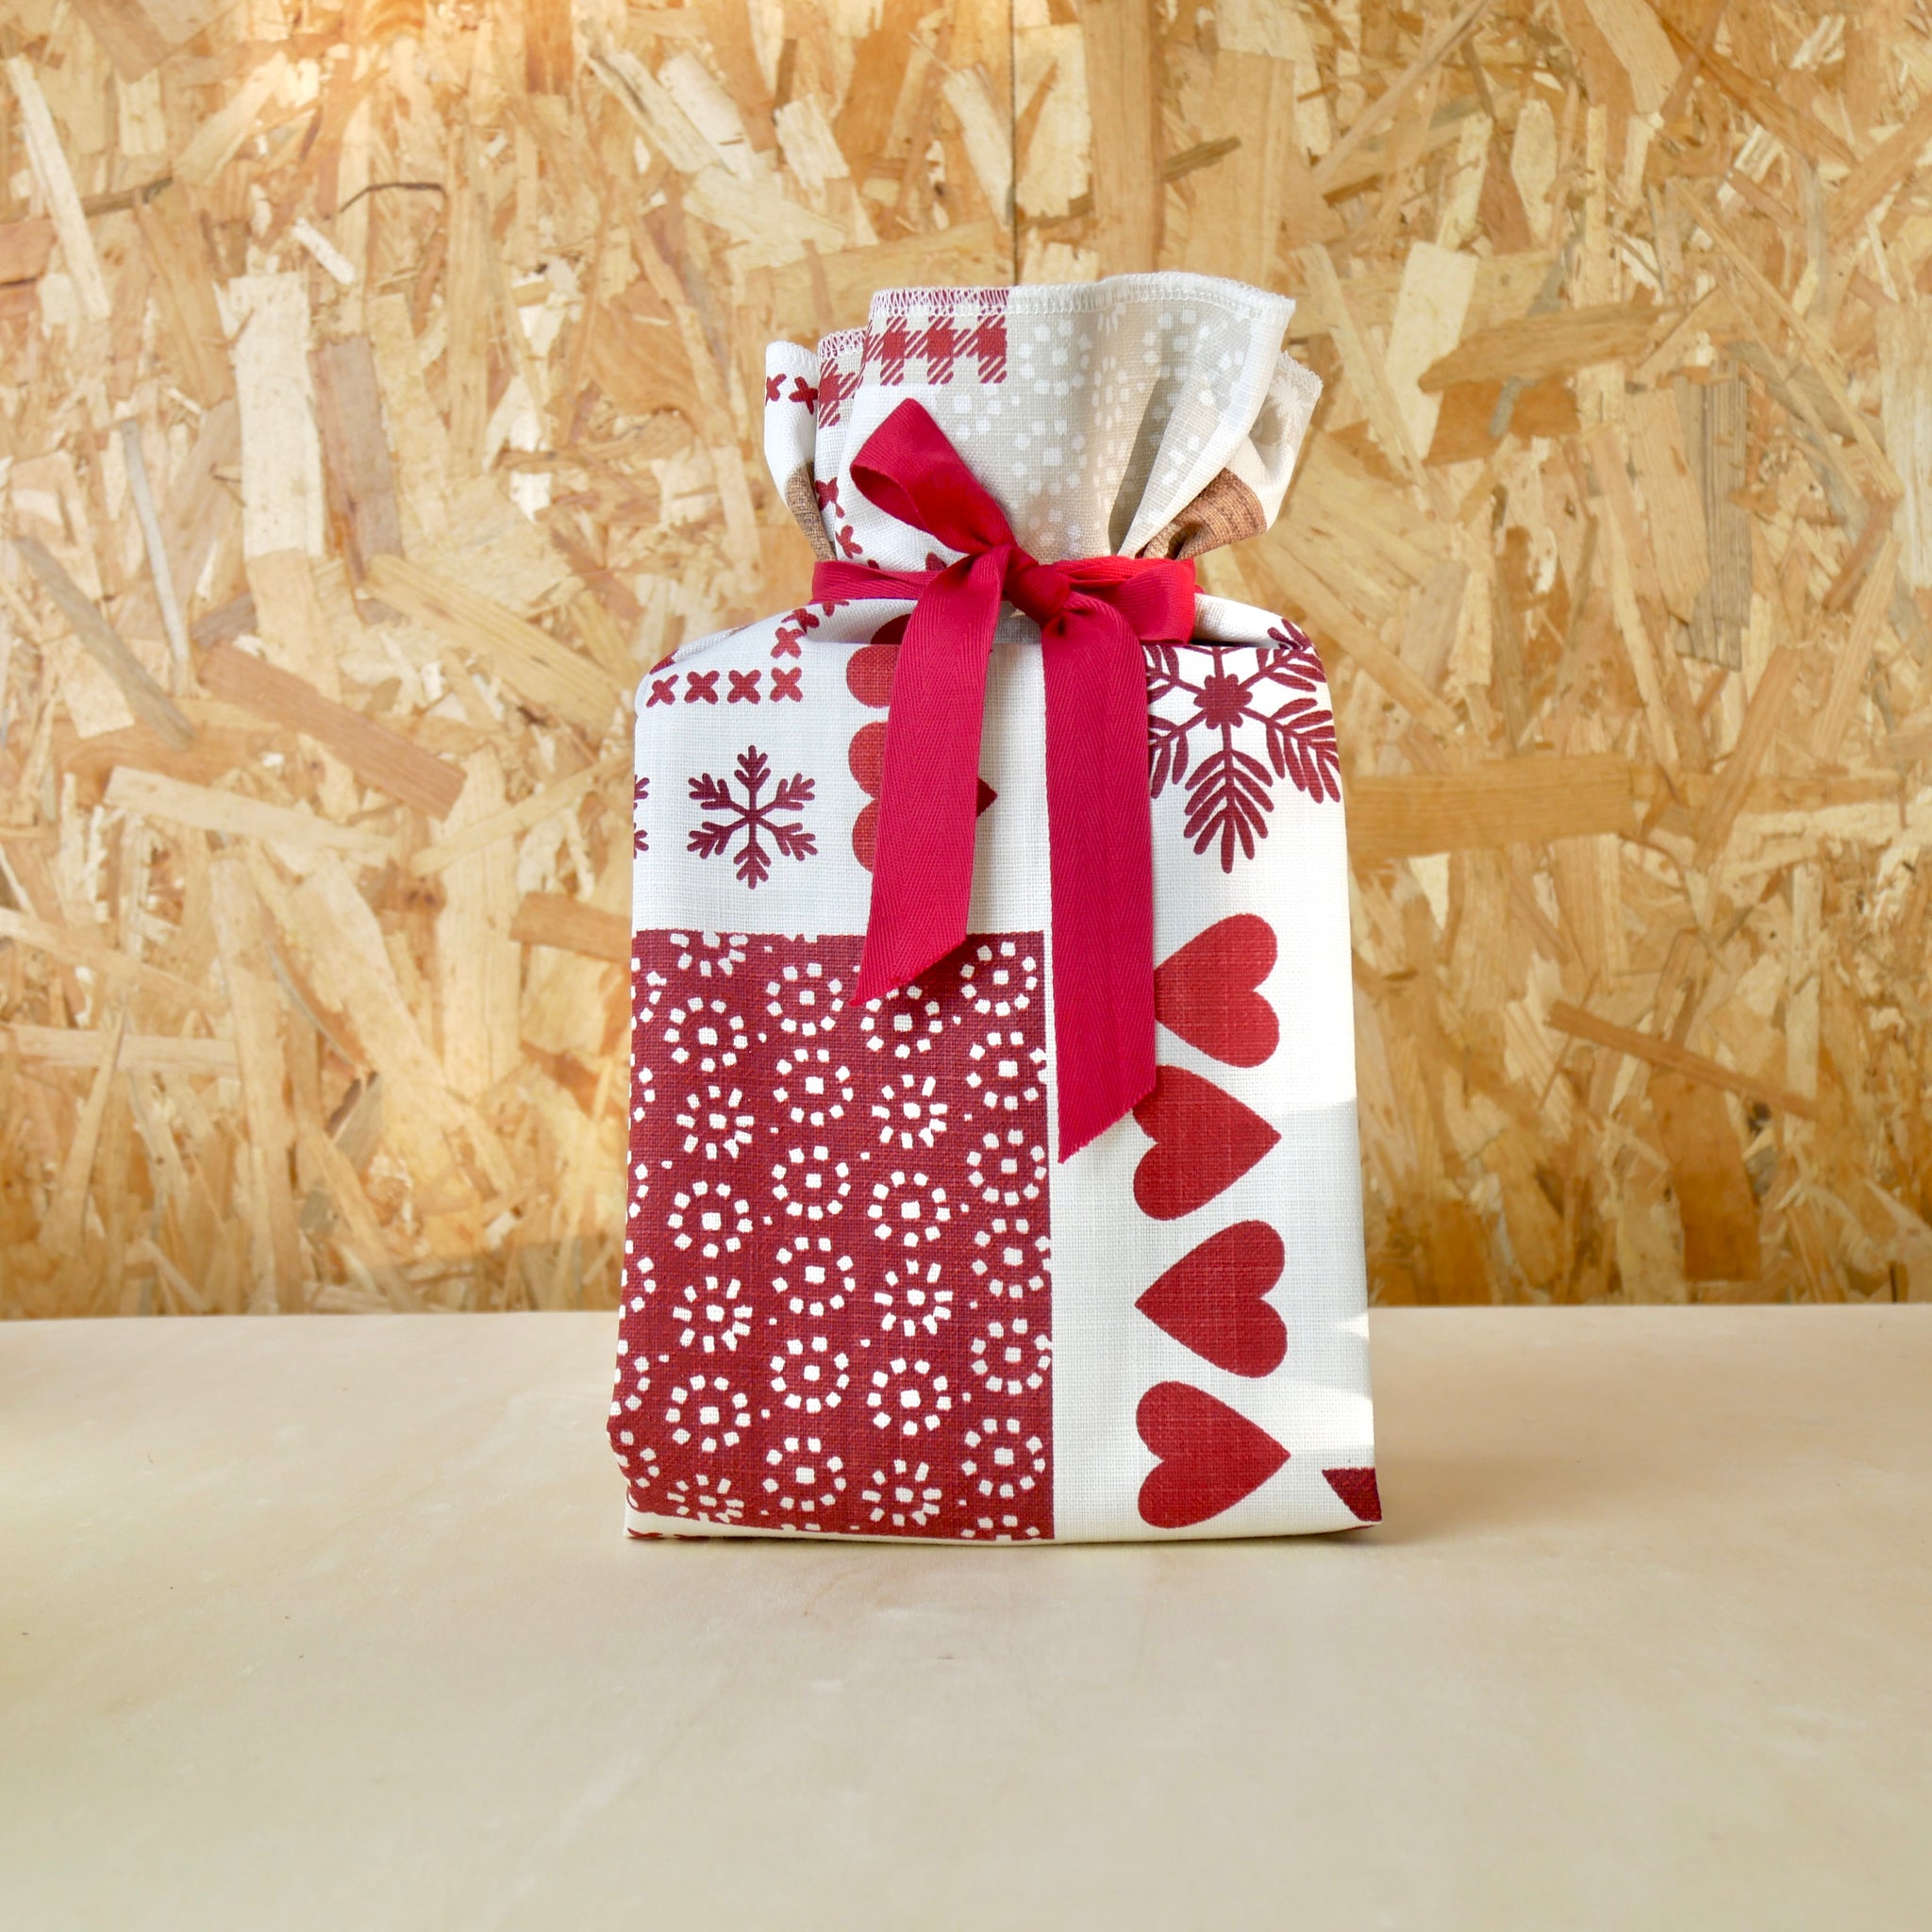 Emballage cadeau réutilisable coton – Nile-Tissu